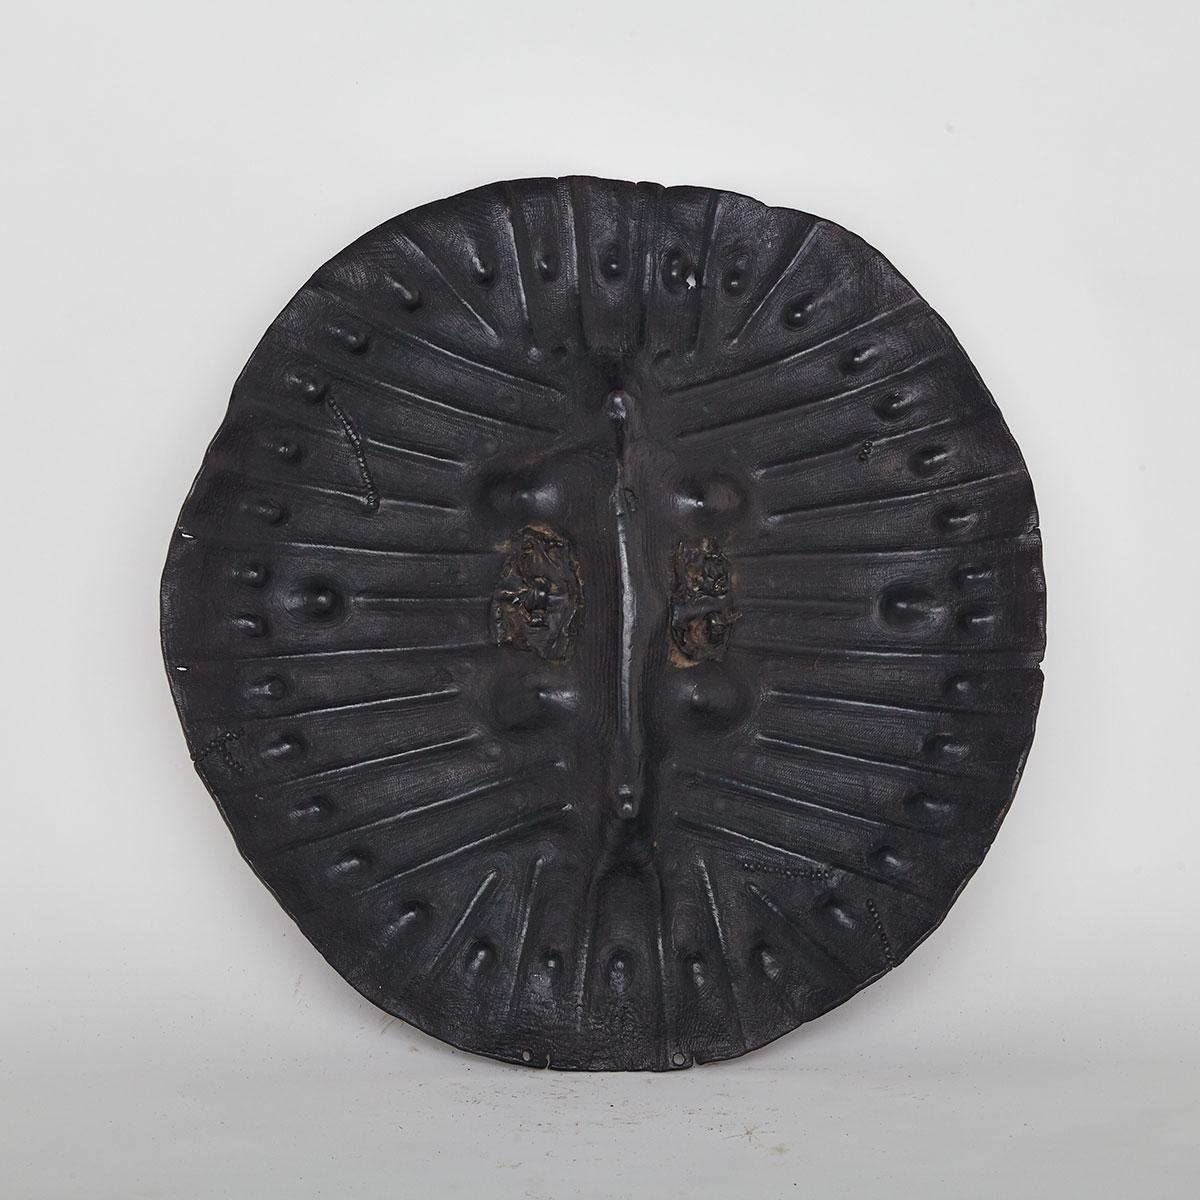 Ethiopian Oromo Shield, early 20th century